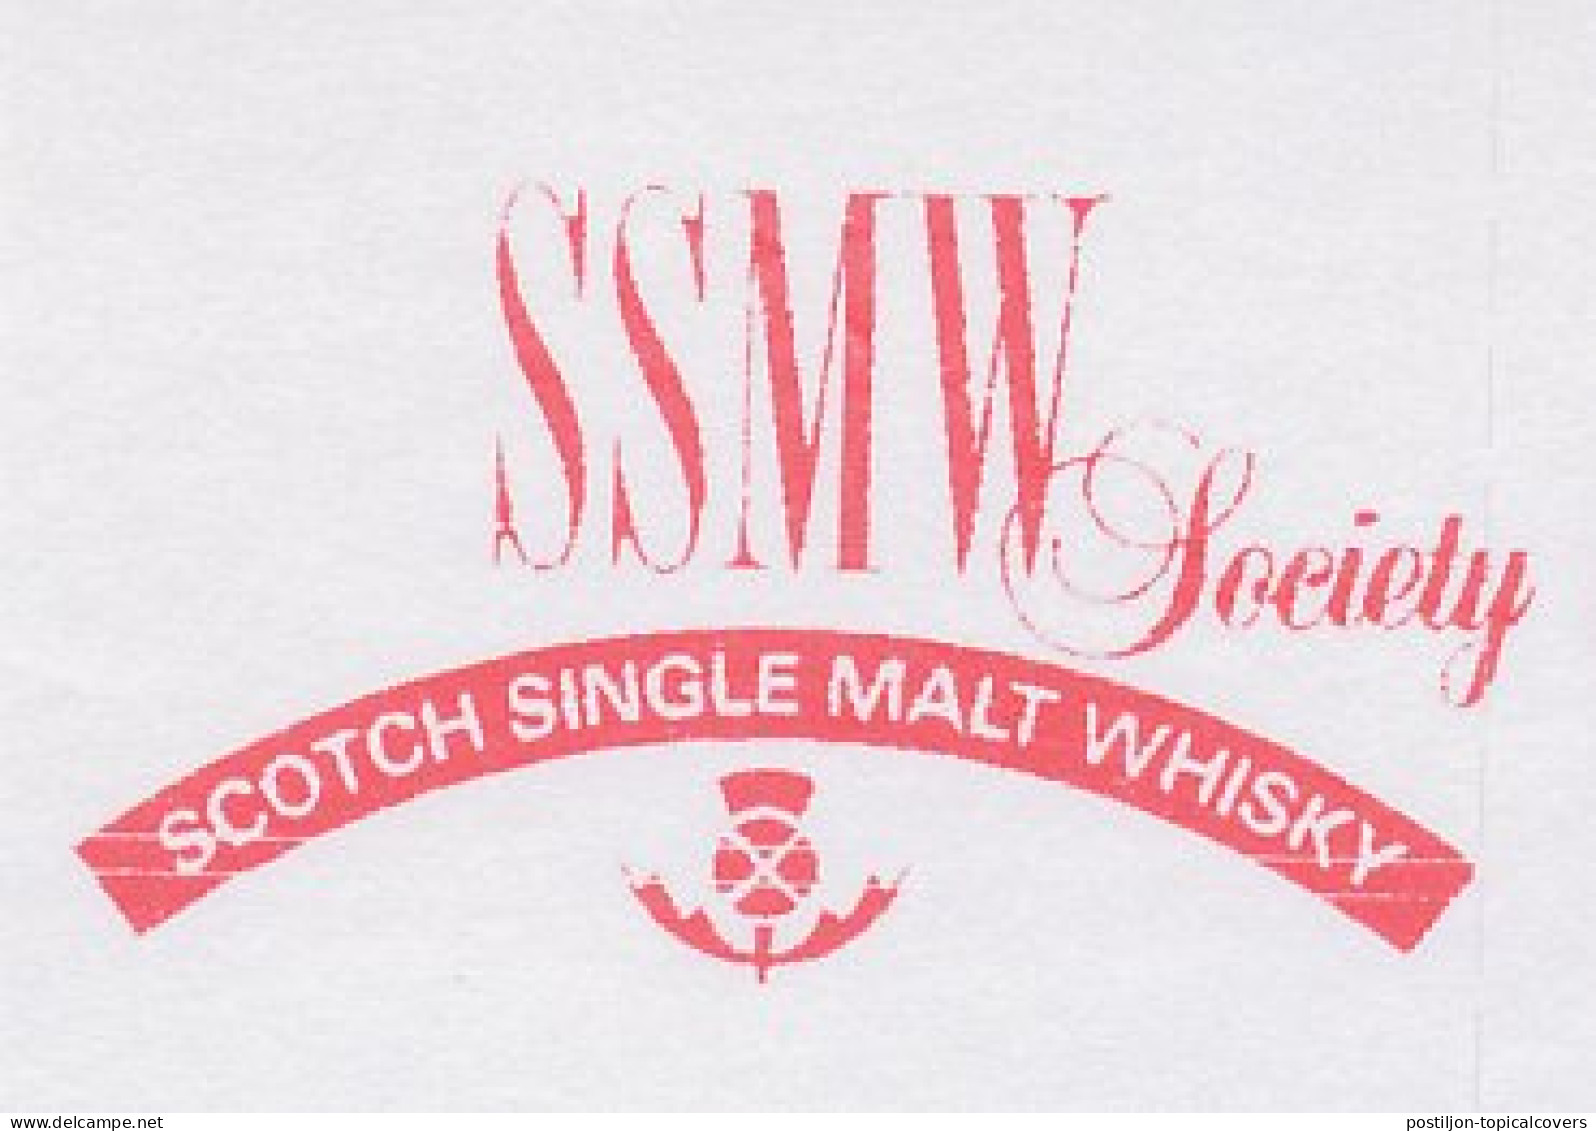 Meter Proof / Test Strip FRAMA Supplier Netherlands SSMW - Scotch Single Malt Whisky - Vins & Alcools